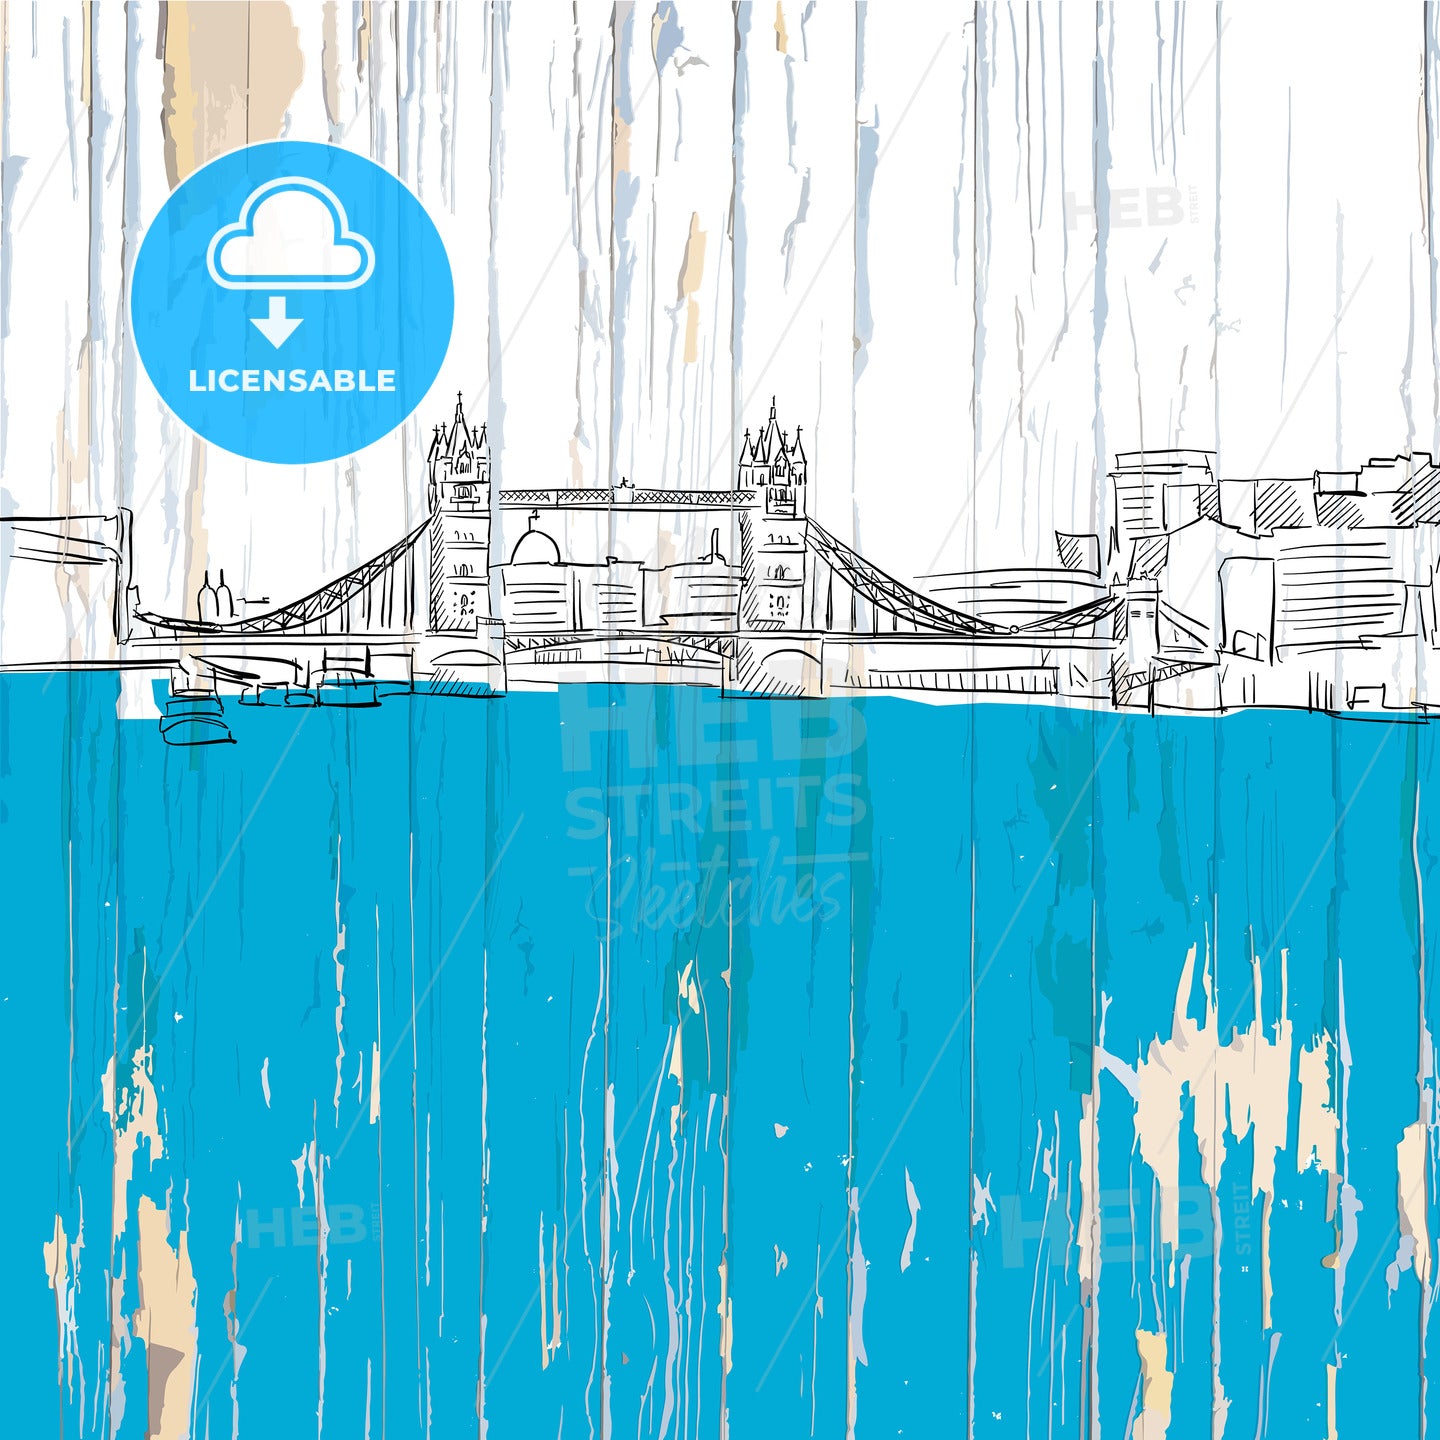 London tower bridge drawing – instant download